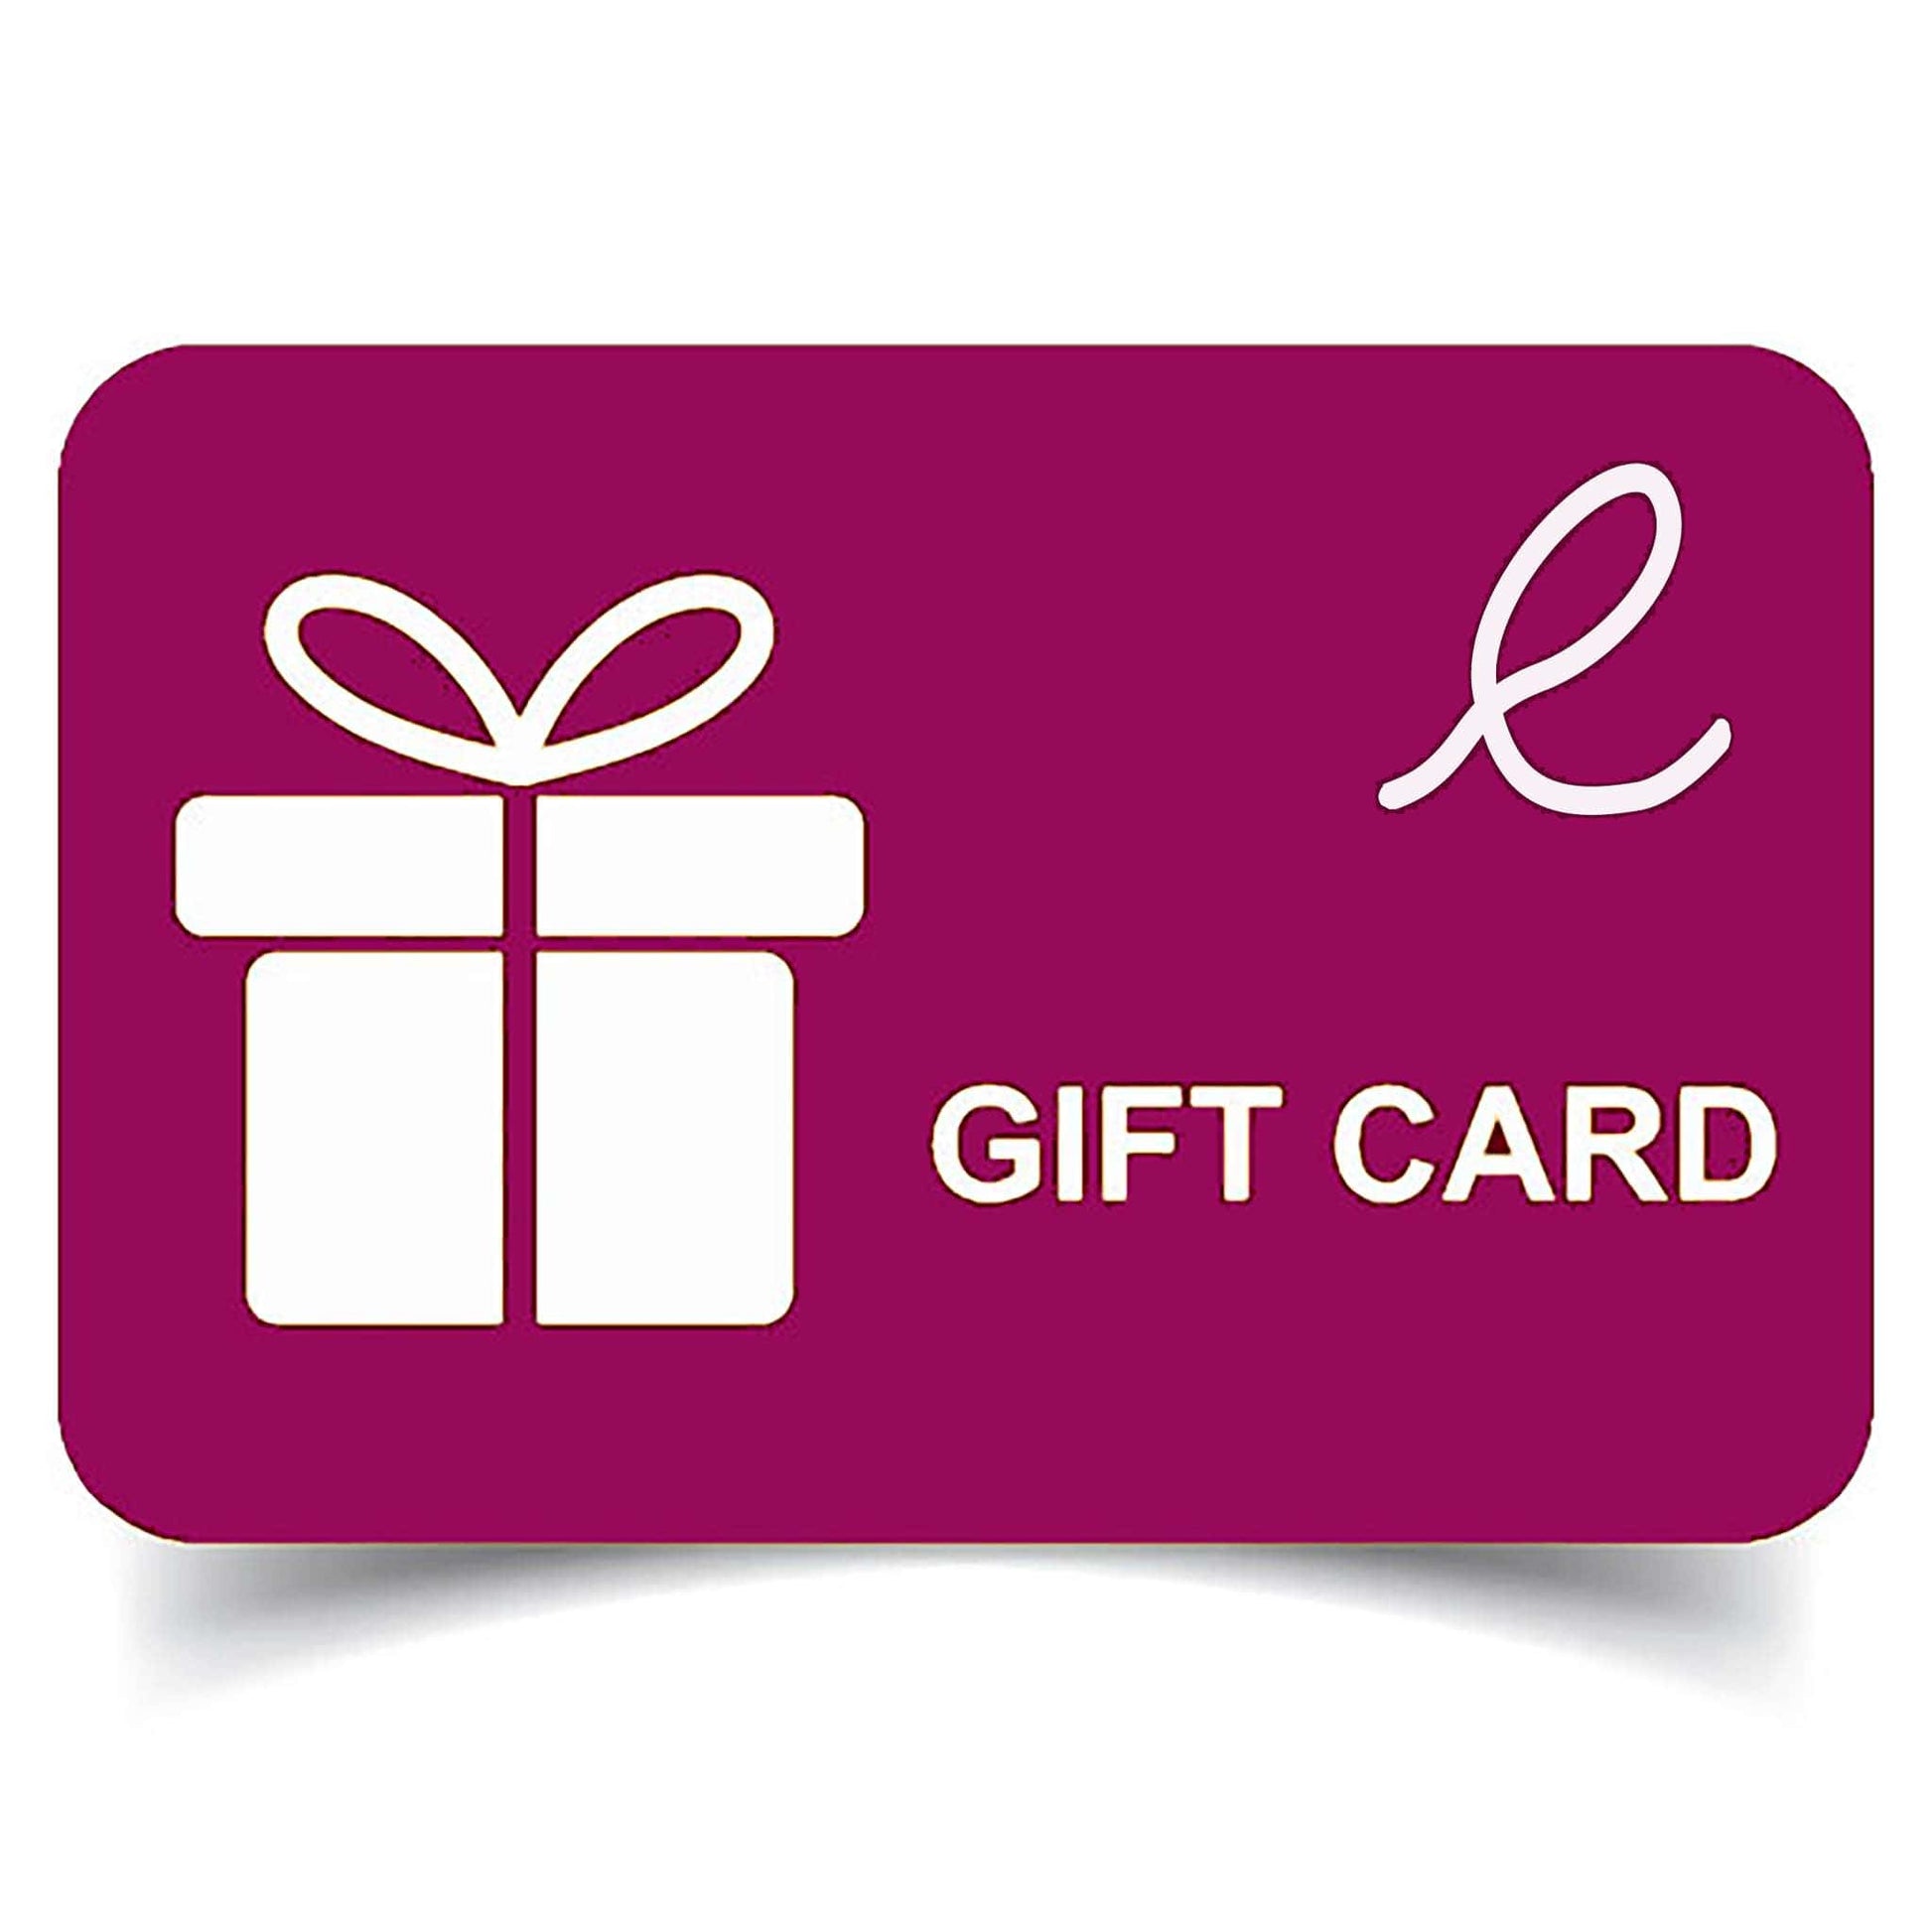 Gift Card E-GIFT CARD